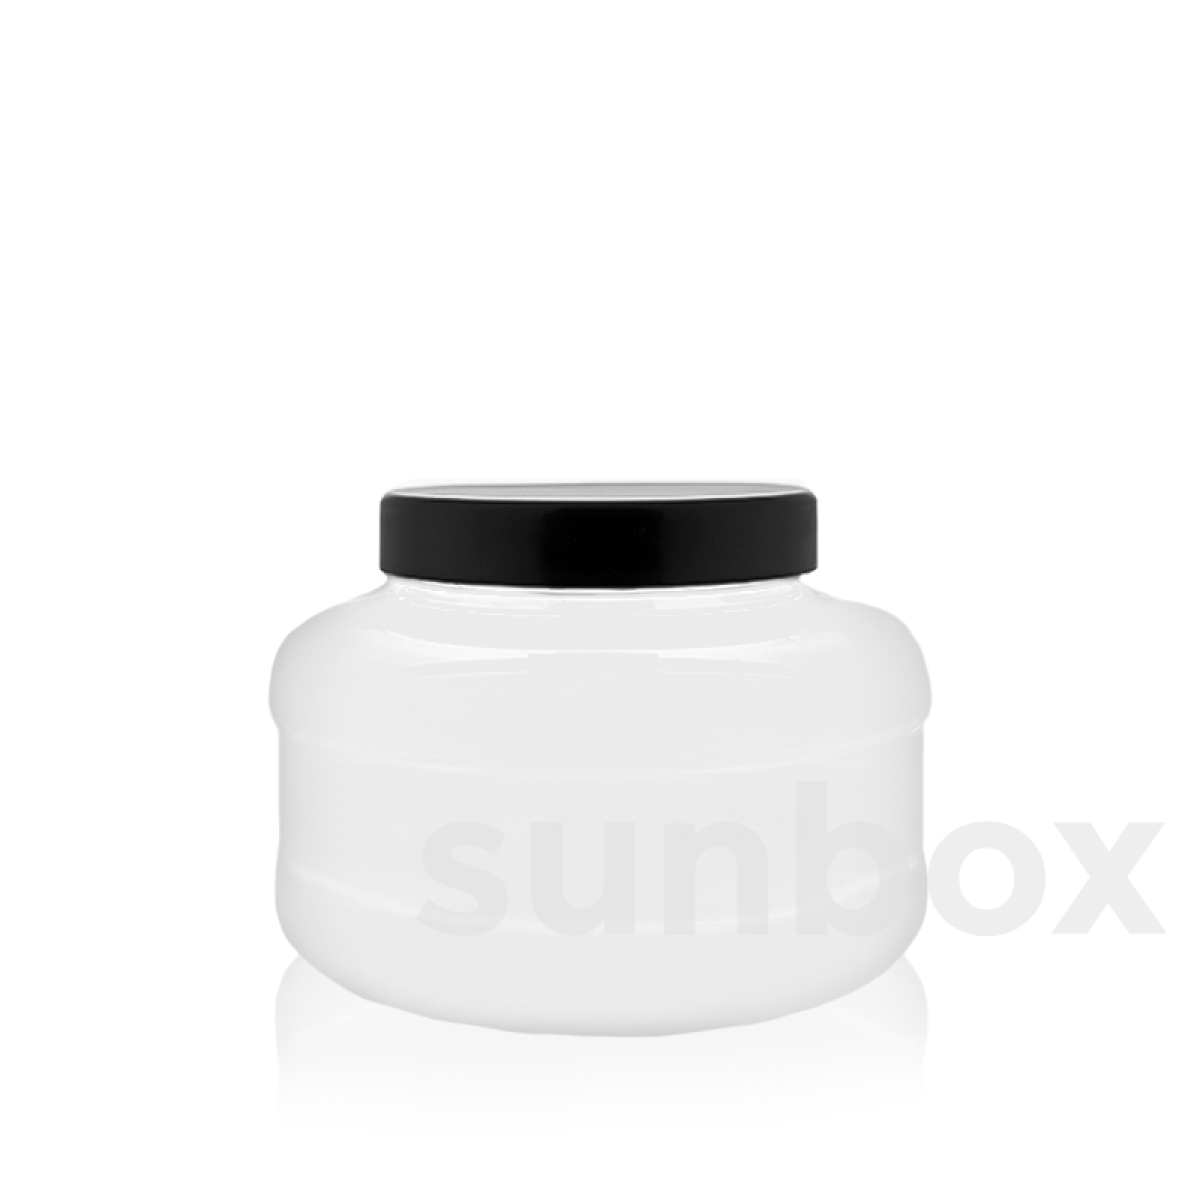 sunbox_prod_3